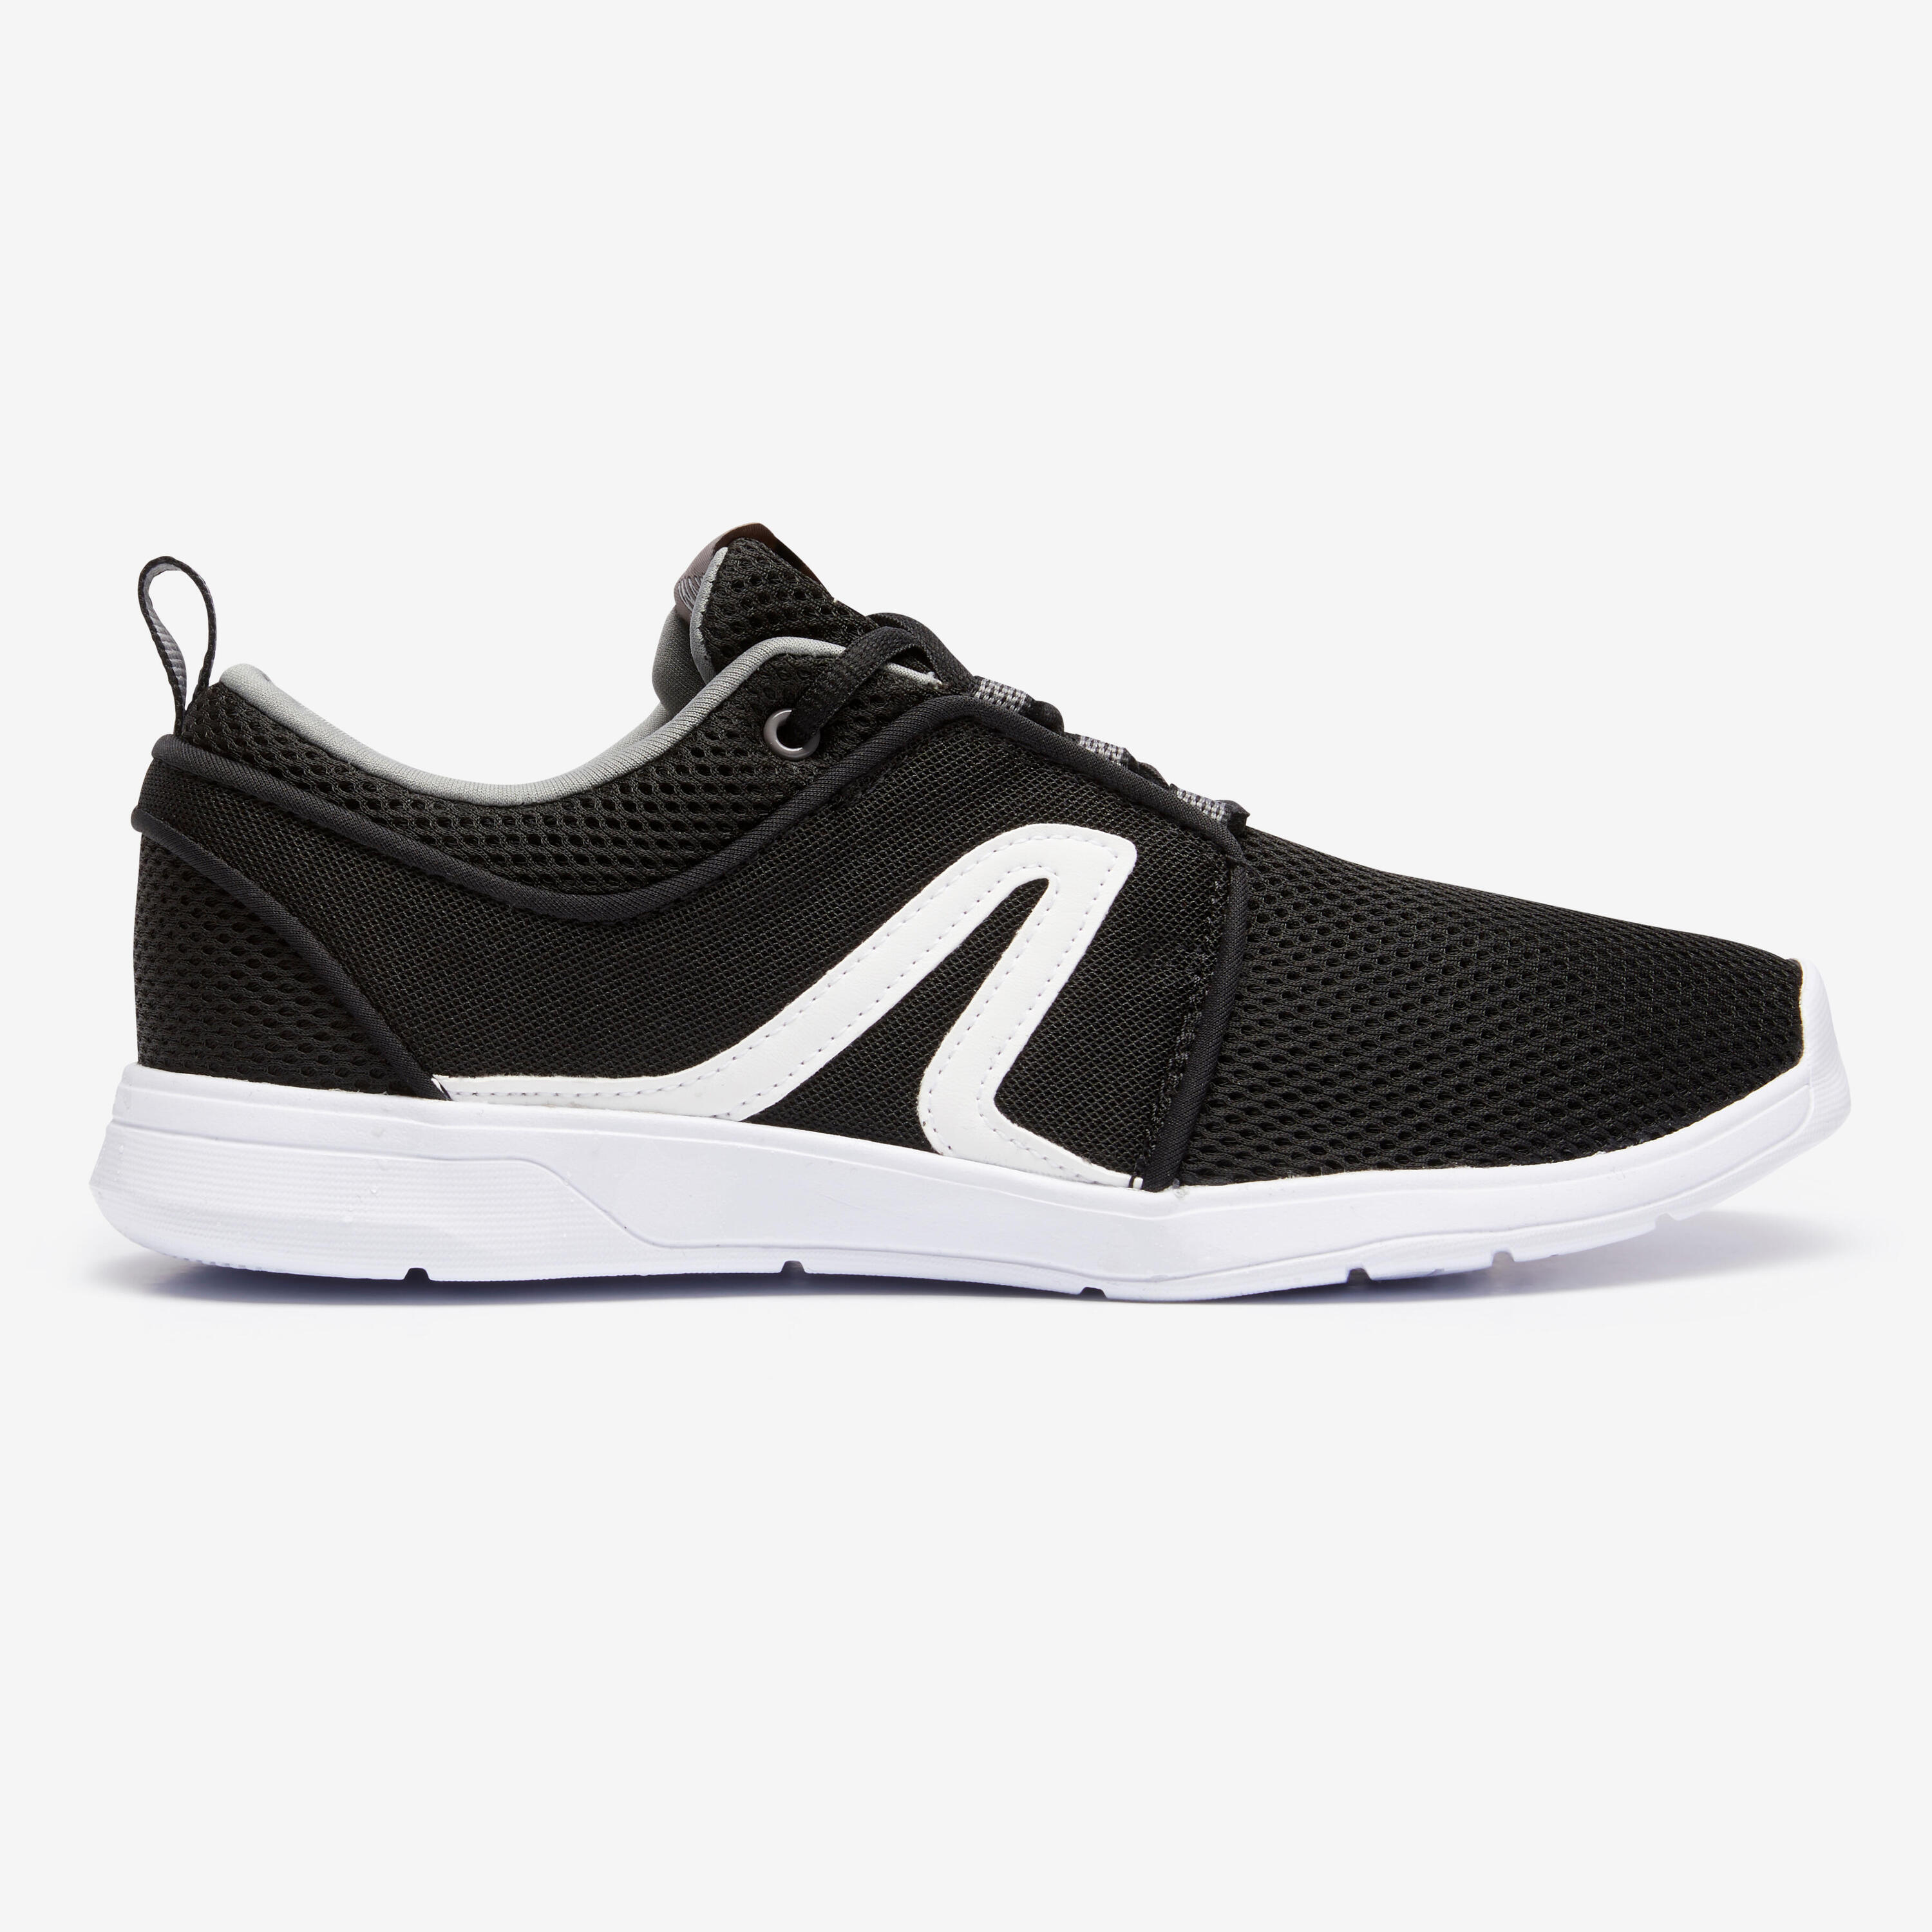 NEWFEEL Soft 140 Mesh Men's Urban Walking Shoes - Black/White